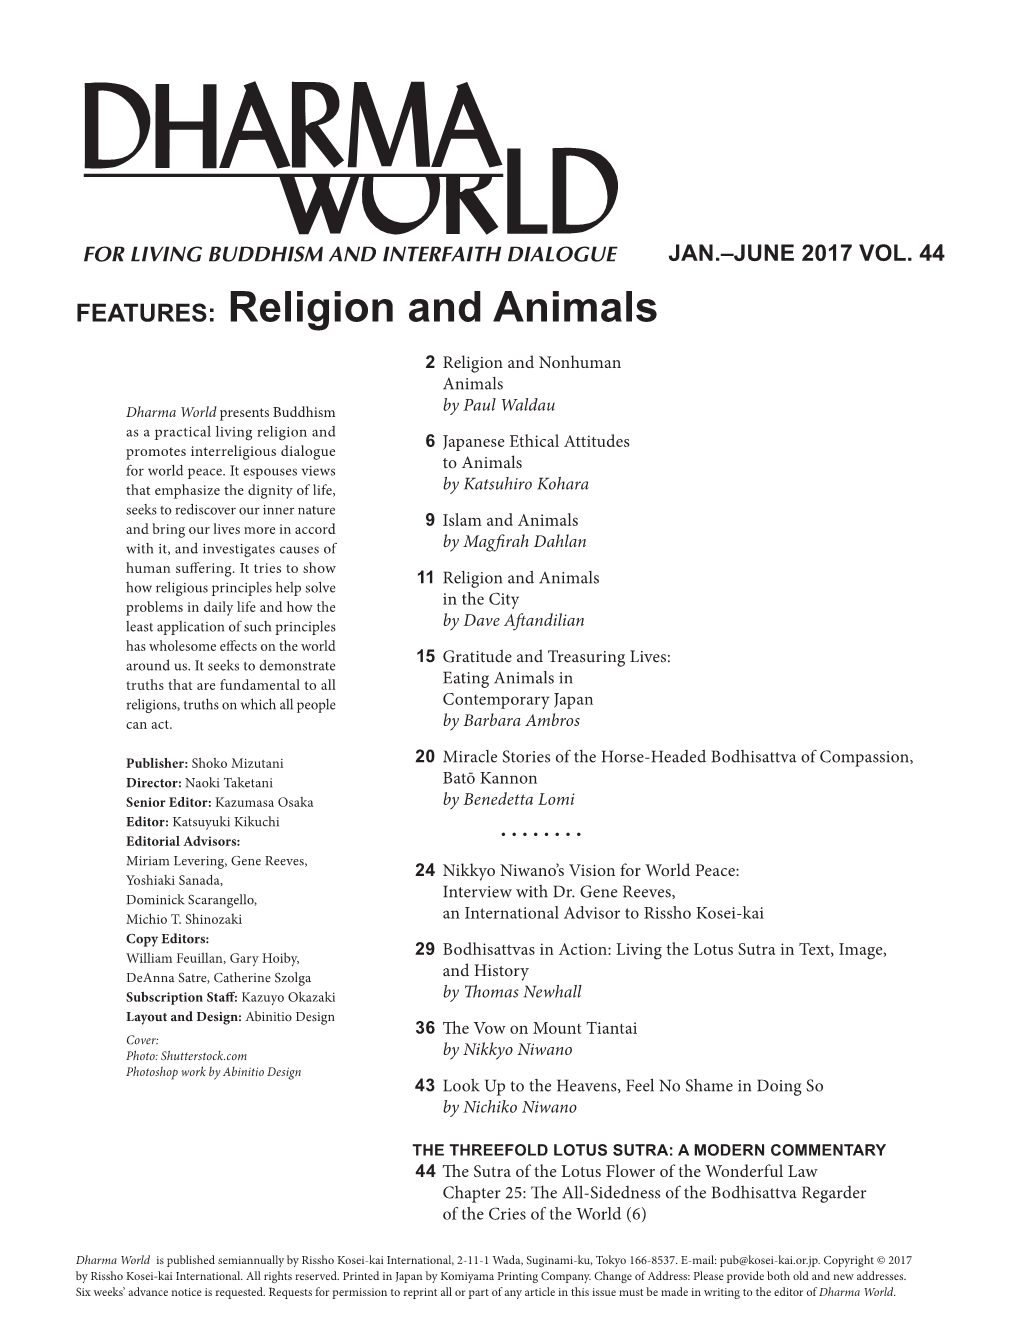 Religion and Animals